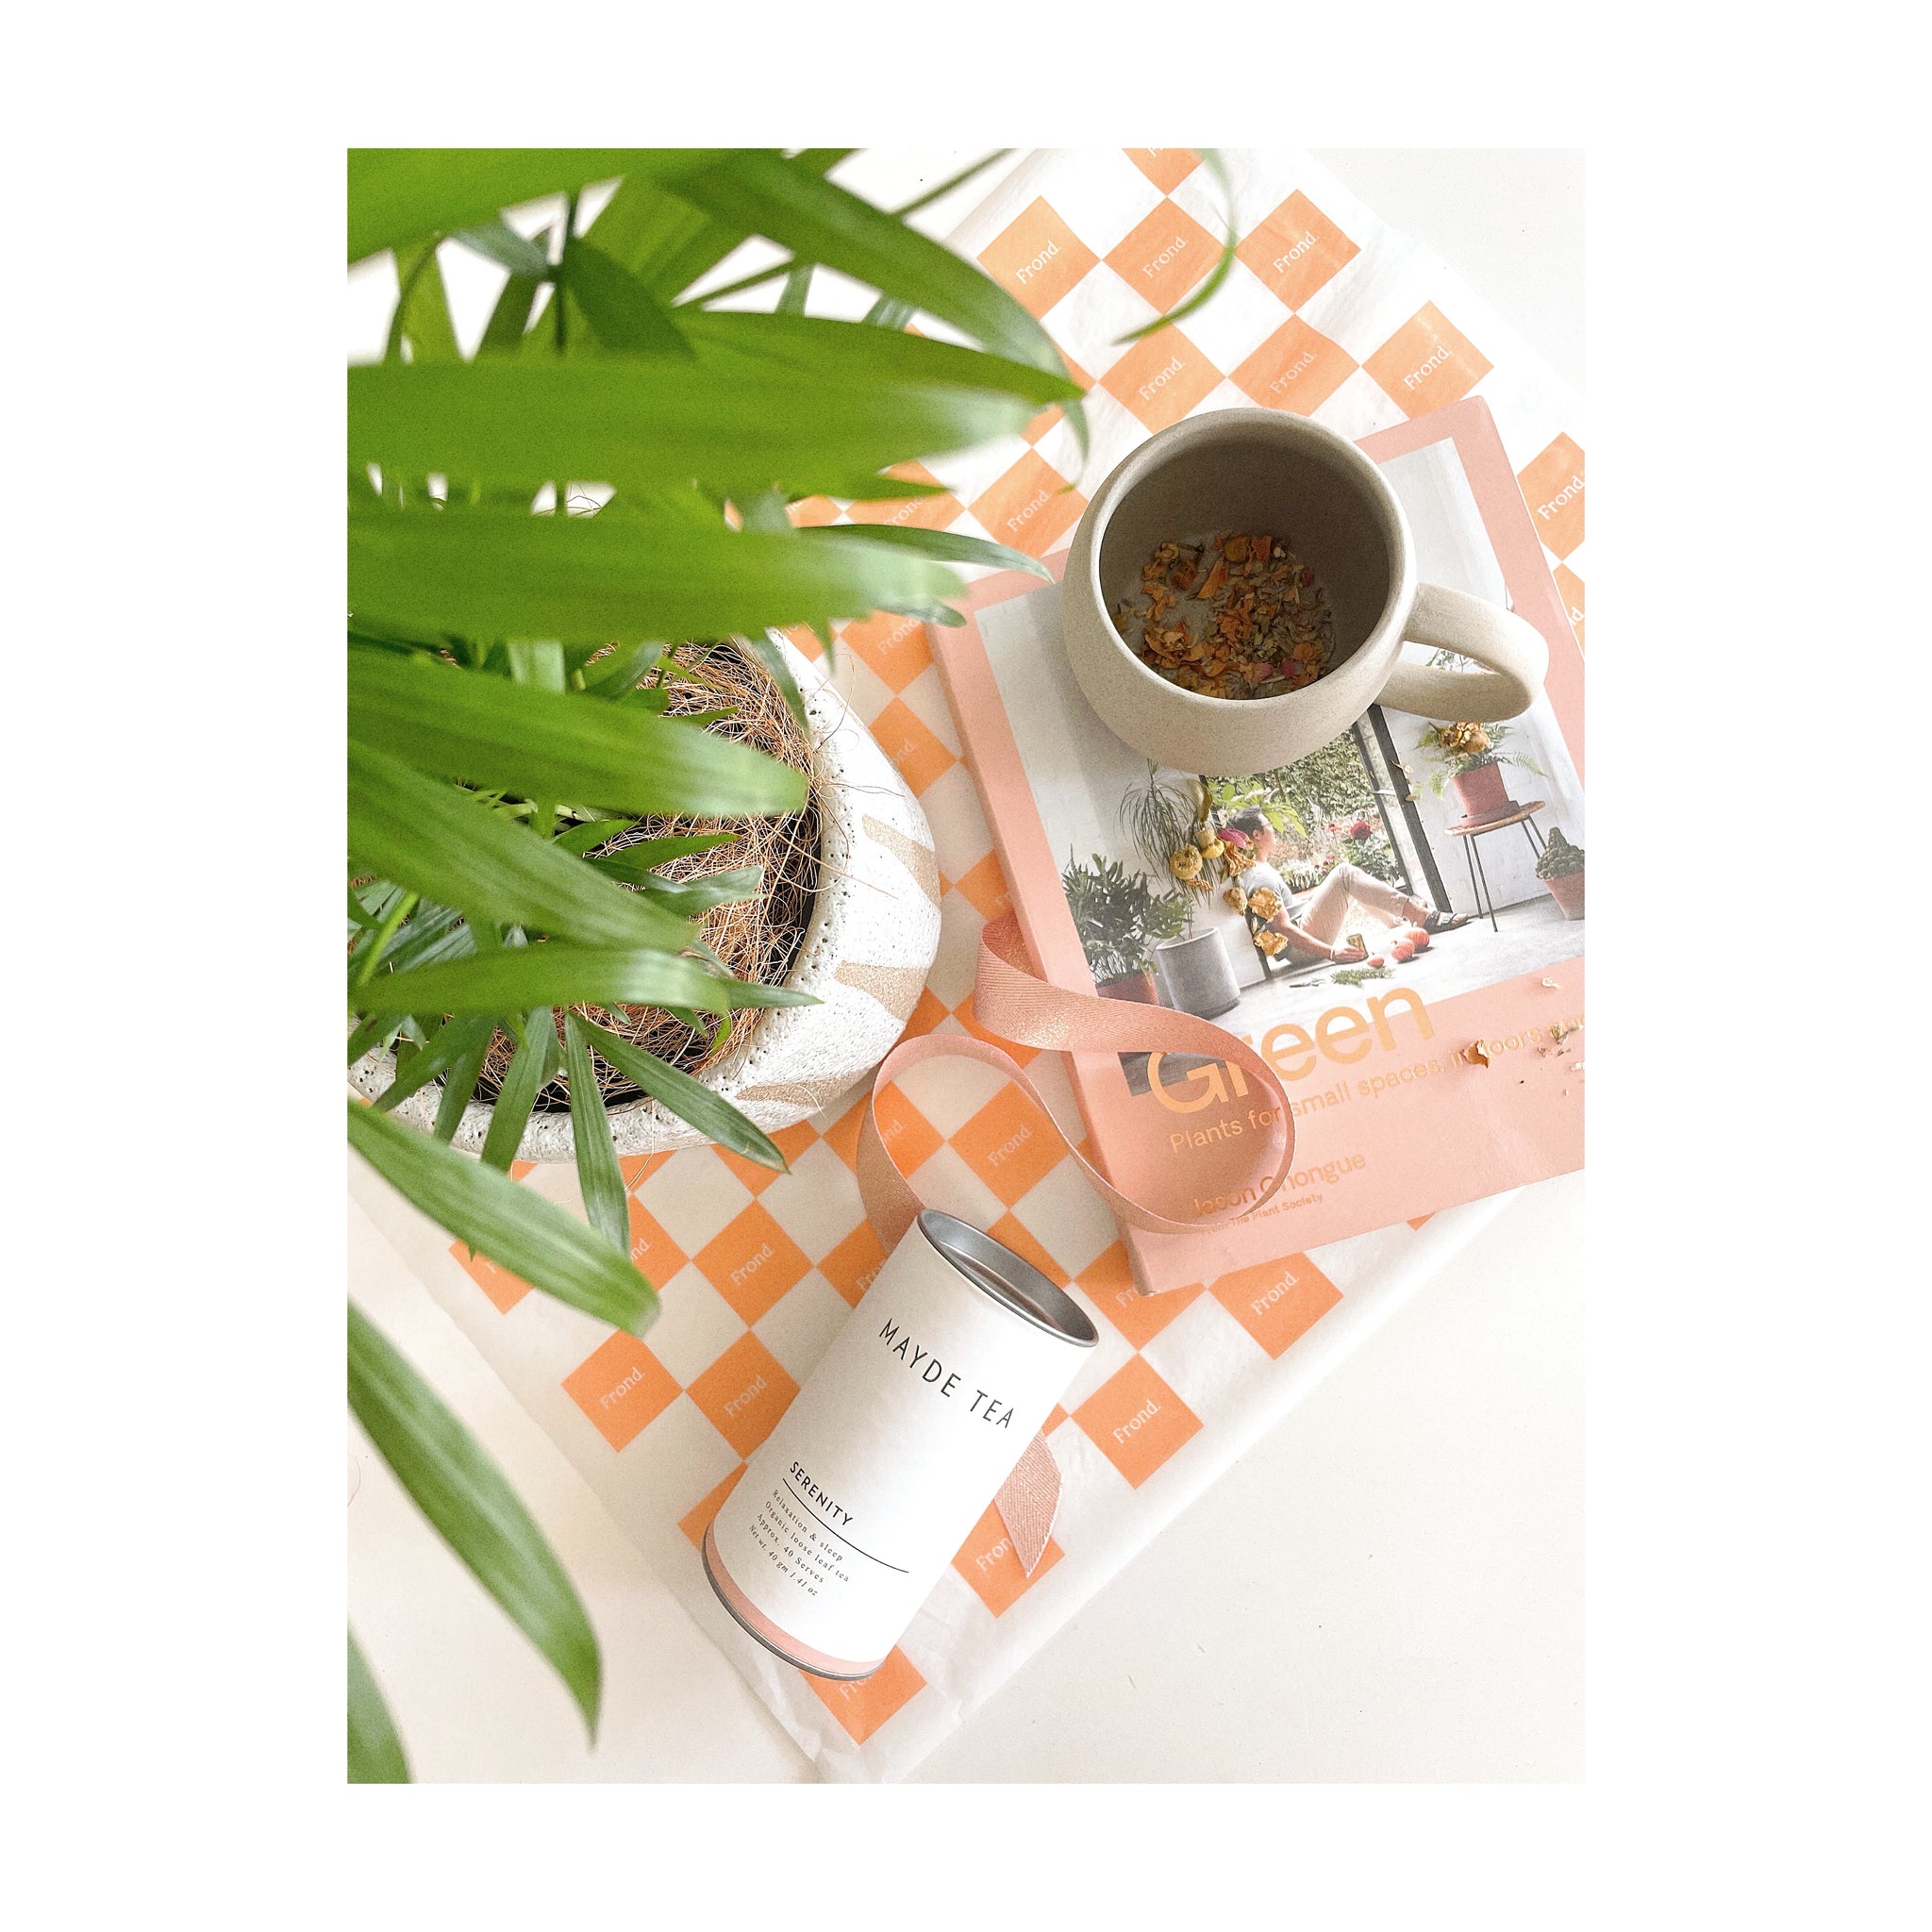 Tranquility Plant Gift Hamper | Parlour Palm + Turia Ceramic Pot + Mayde Tea Serenity 40 Serve Tube + Mayde Tea Willow Mug Beige + Green by Jason Chongue Book + Gift Wrap